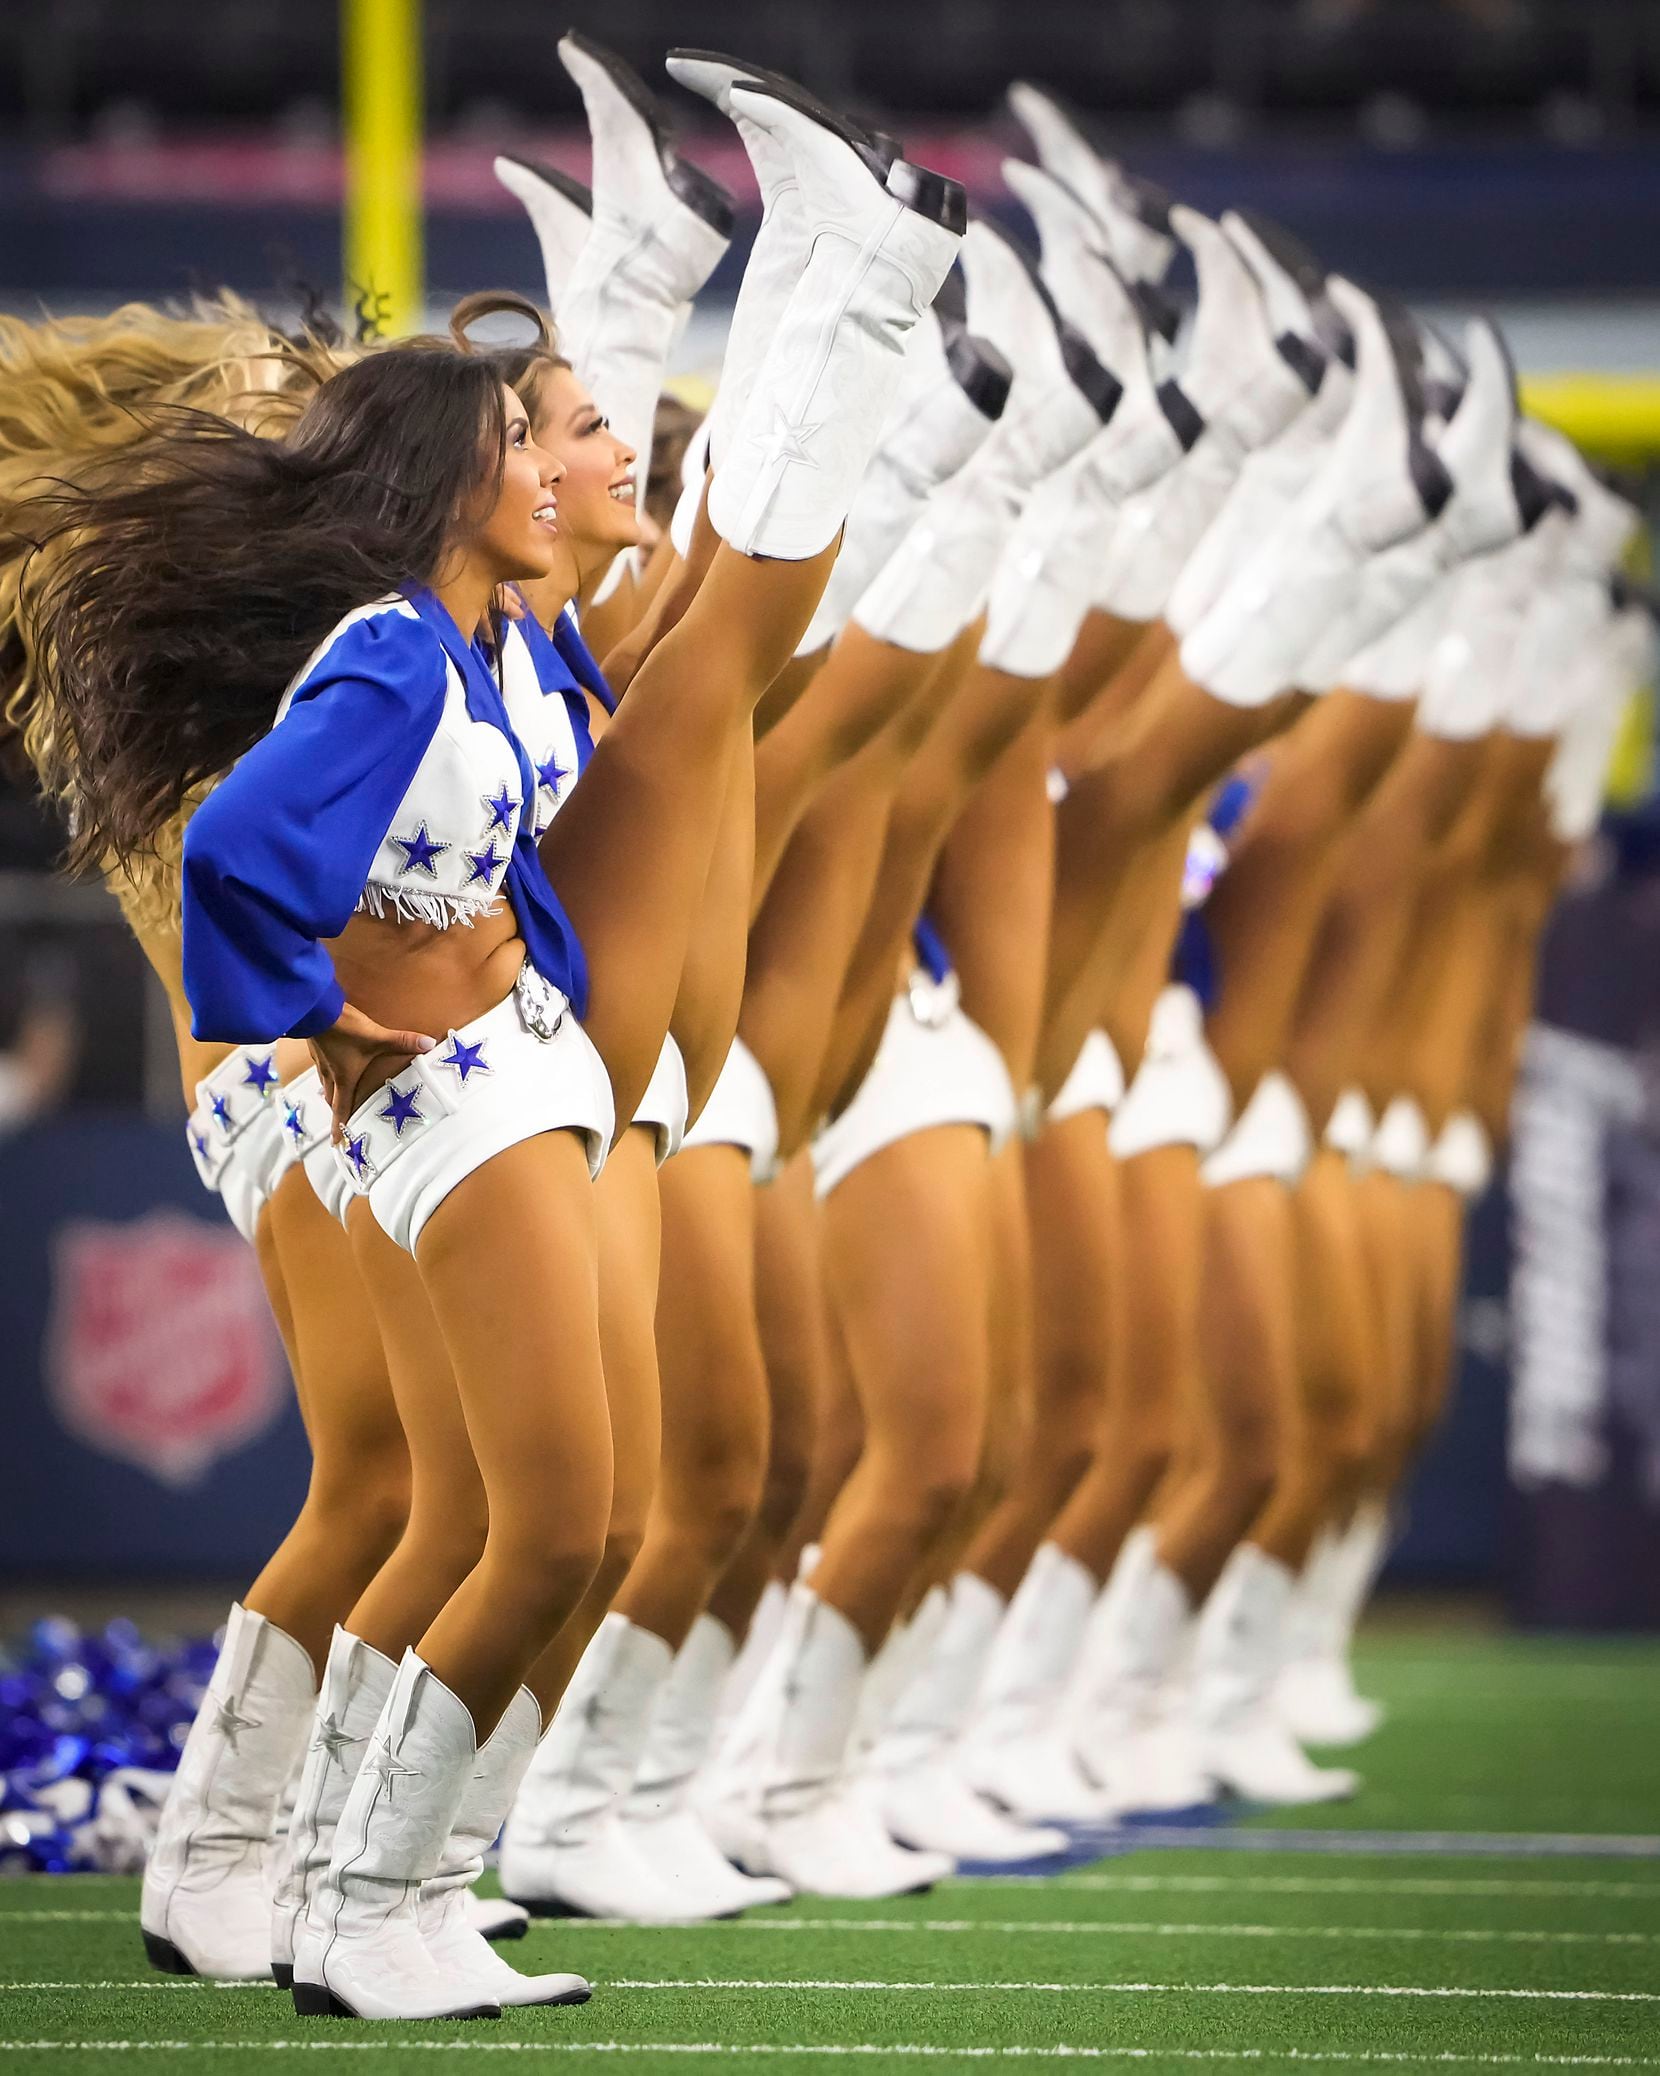 The Dallas Cowboys Cheerleaders perform before a preseason NFL football game against the...